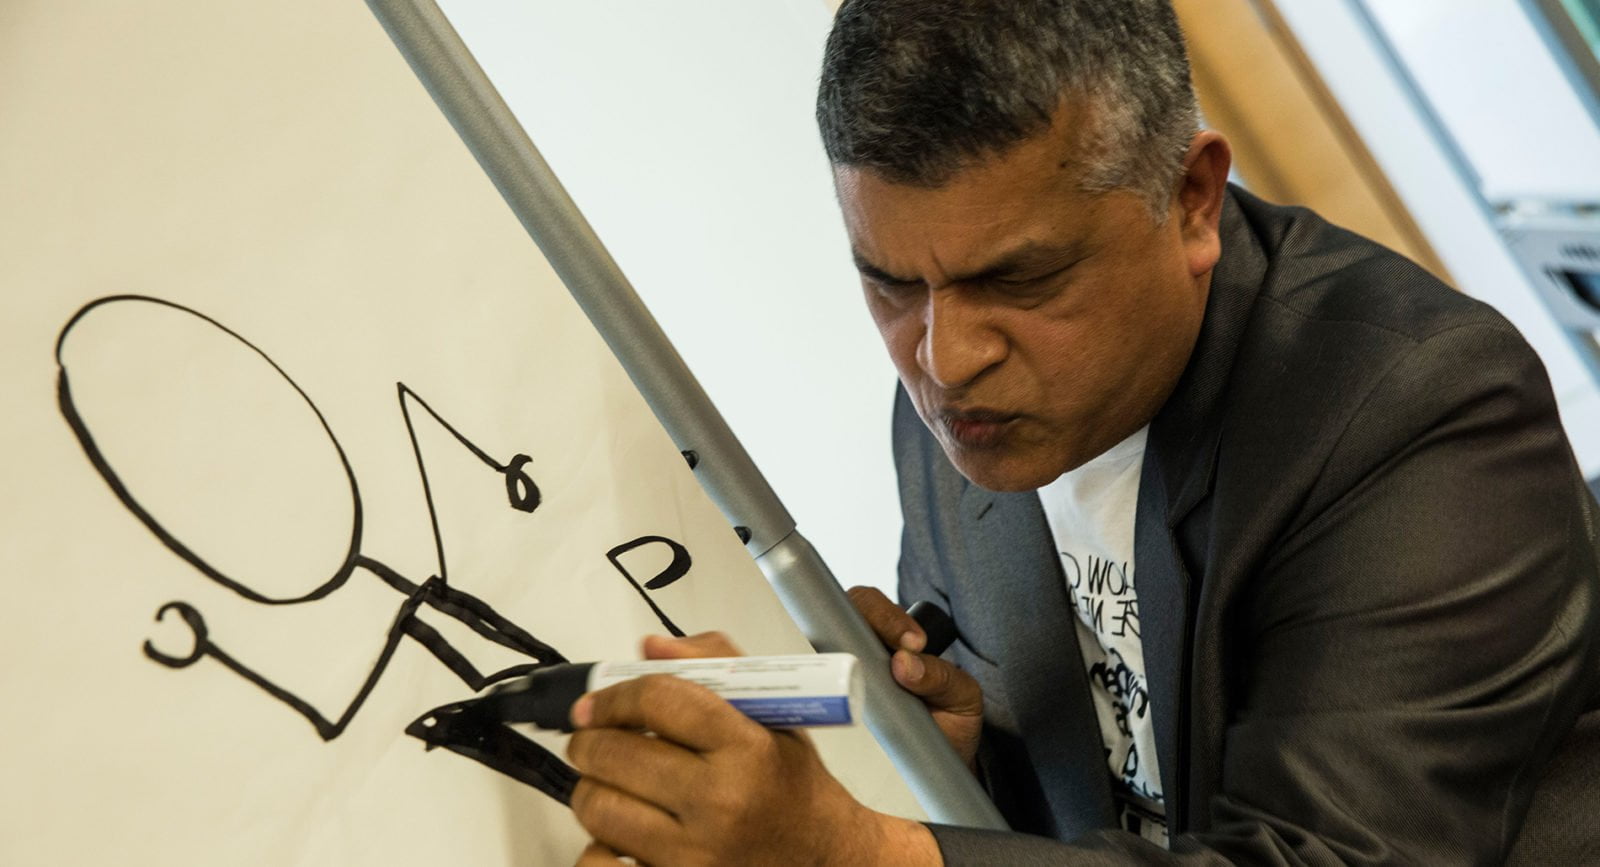 Malaysian cartoonist Zunar giving an illustration workshop at Amnesty International head office